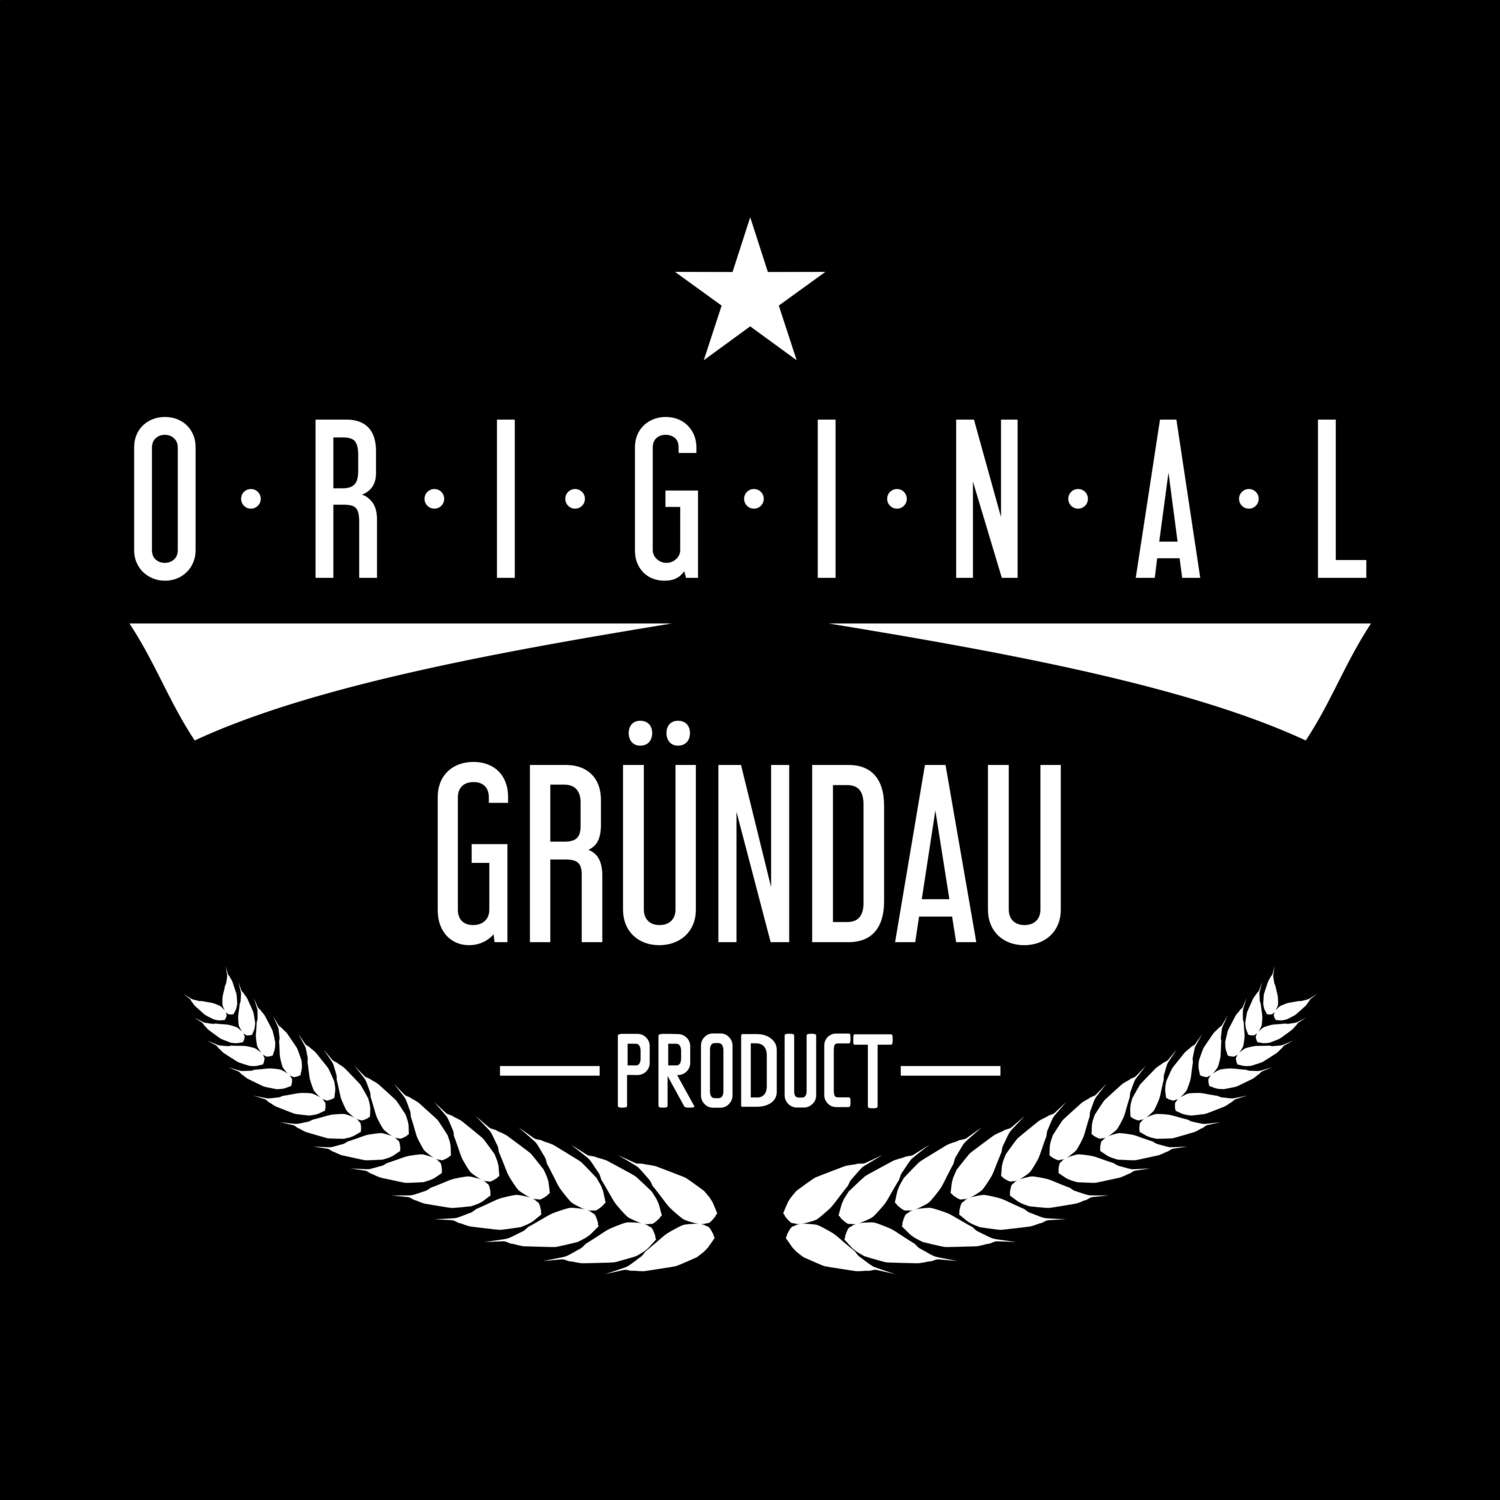 Gründau T-Shirt »Original Product«